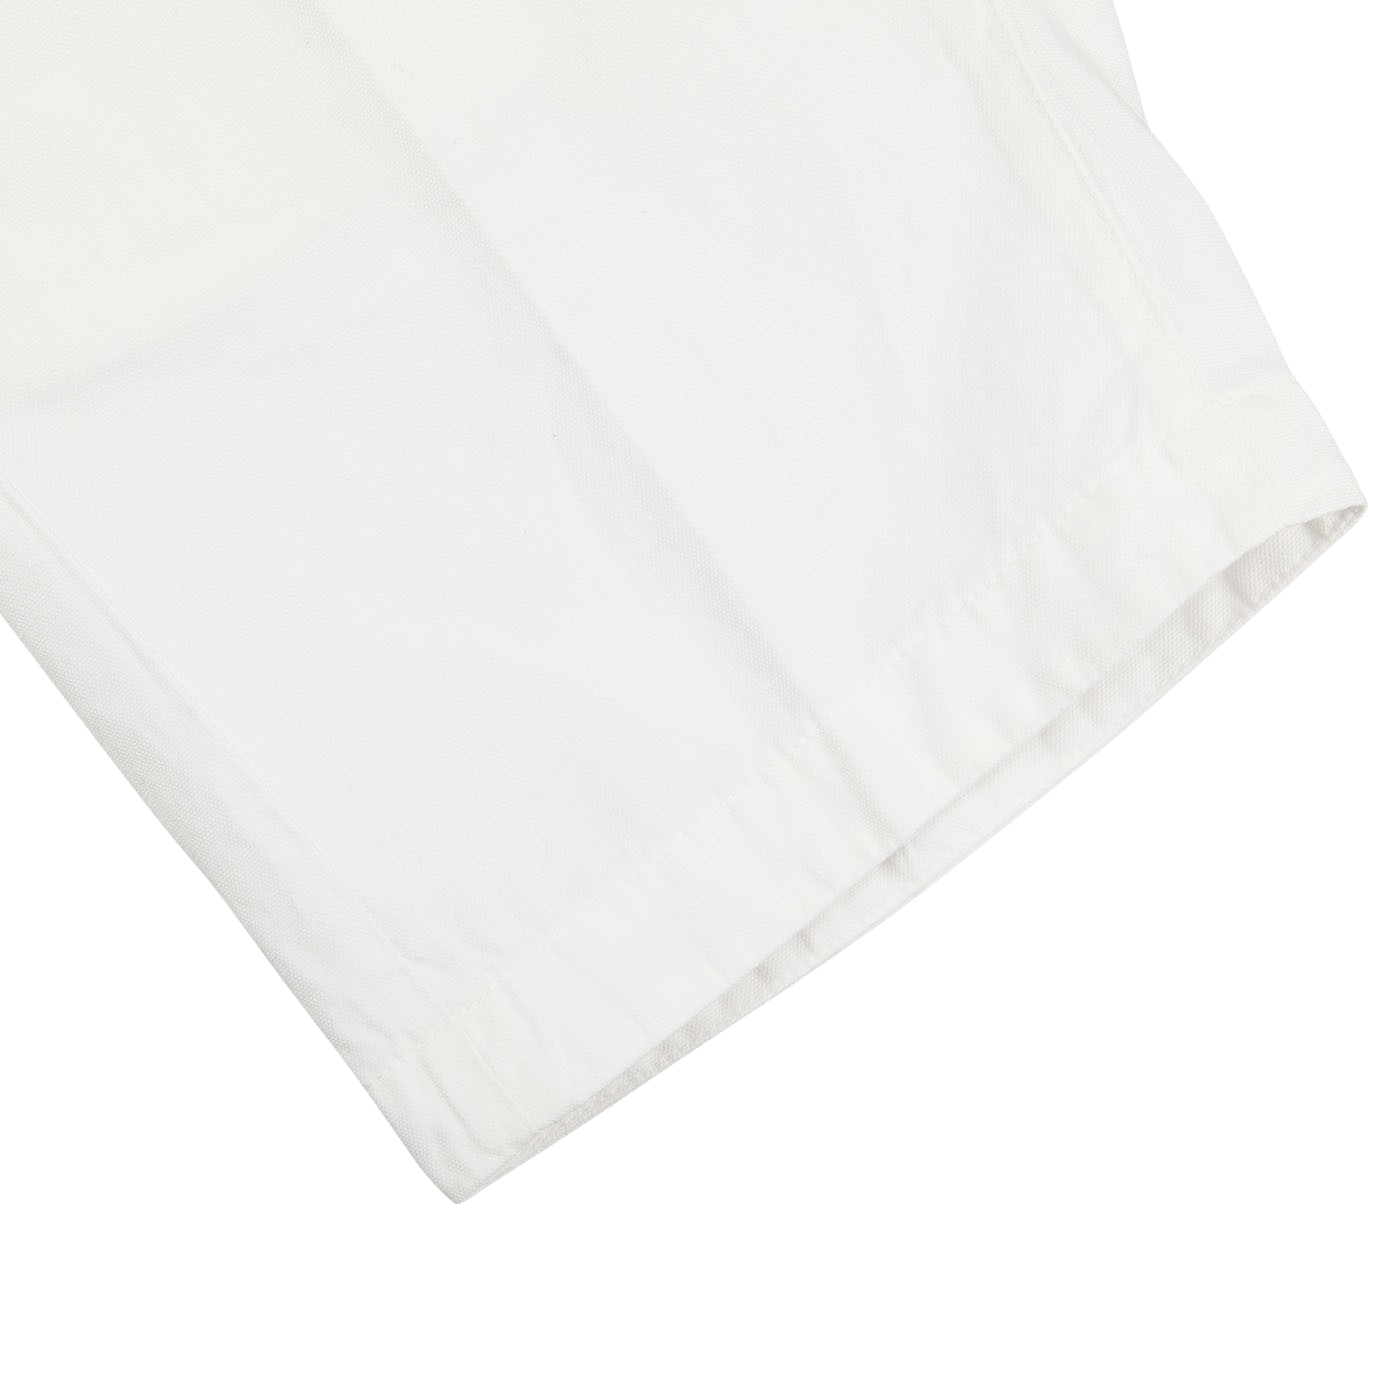 A close up image of a Tela Genova white cotton linen Bermuda shorts.